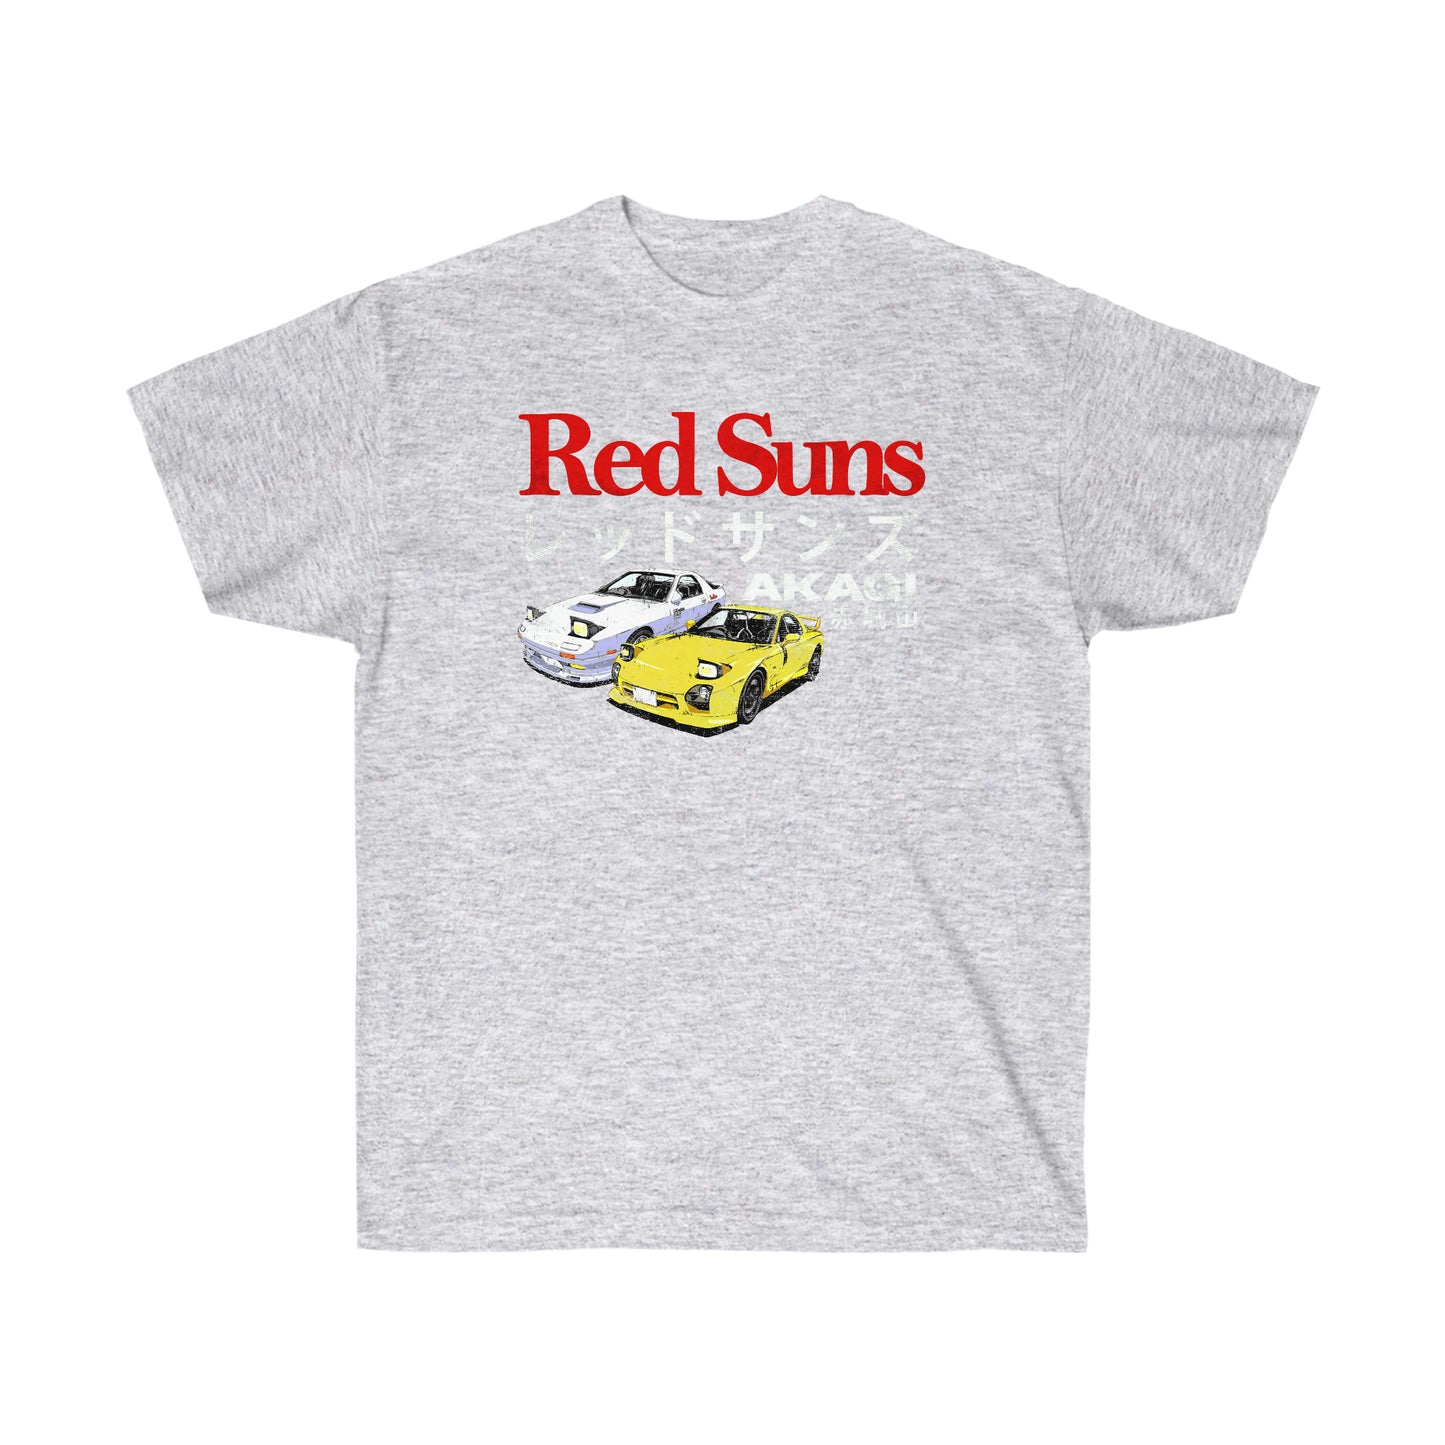 Akagis RedSuns T-Shirt JDM Racing Drifting Race D shirt